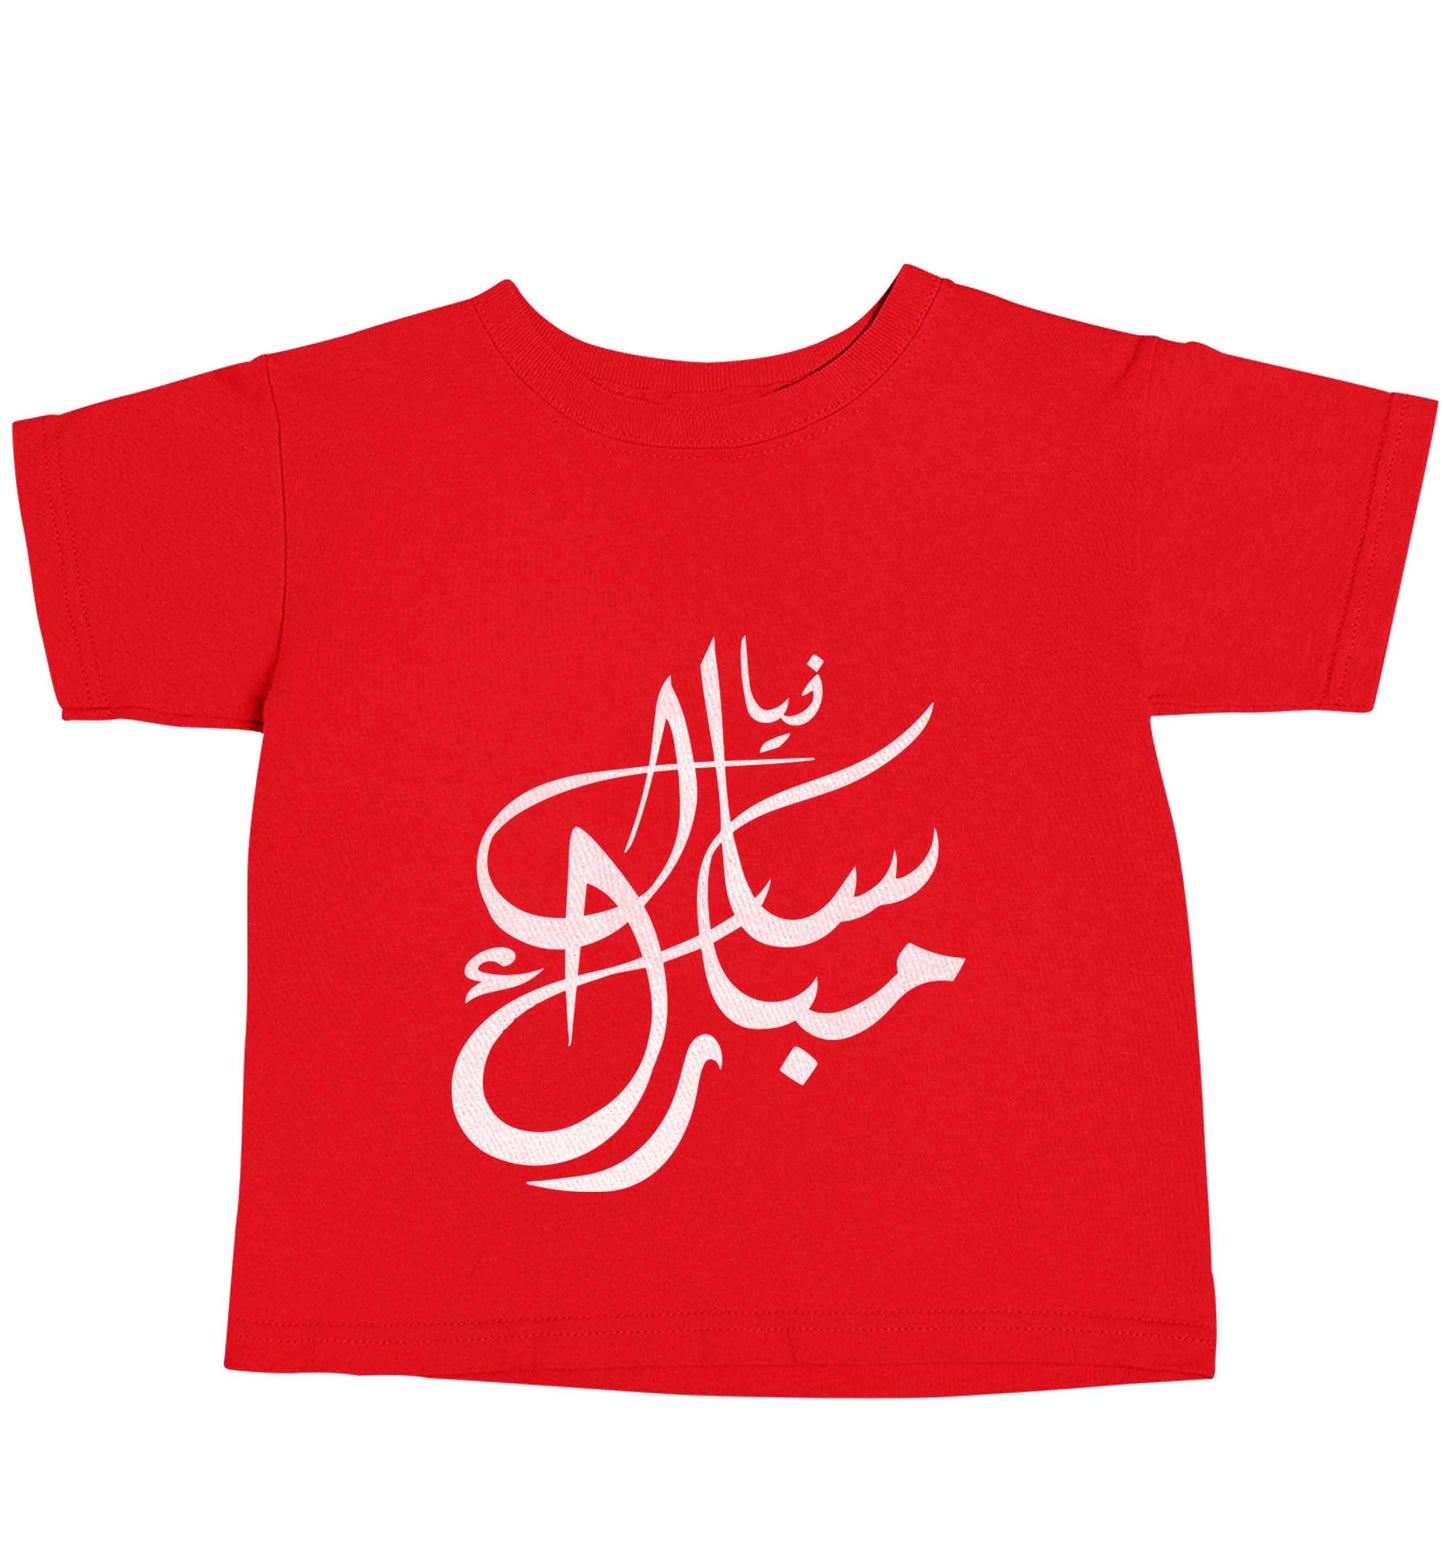 Urdu Naya saal mubarak red baby toddler Tshirt 2 Years